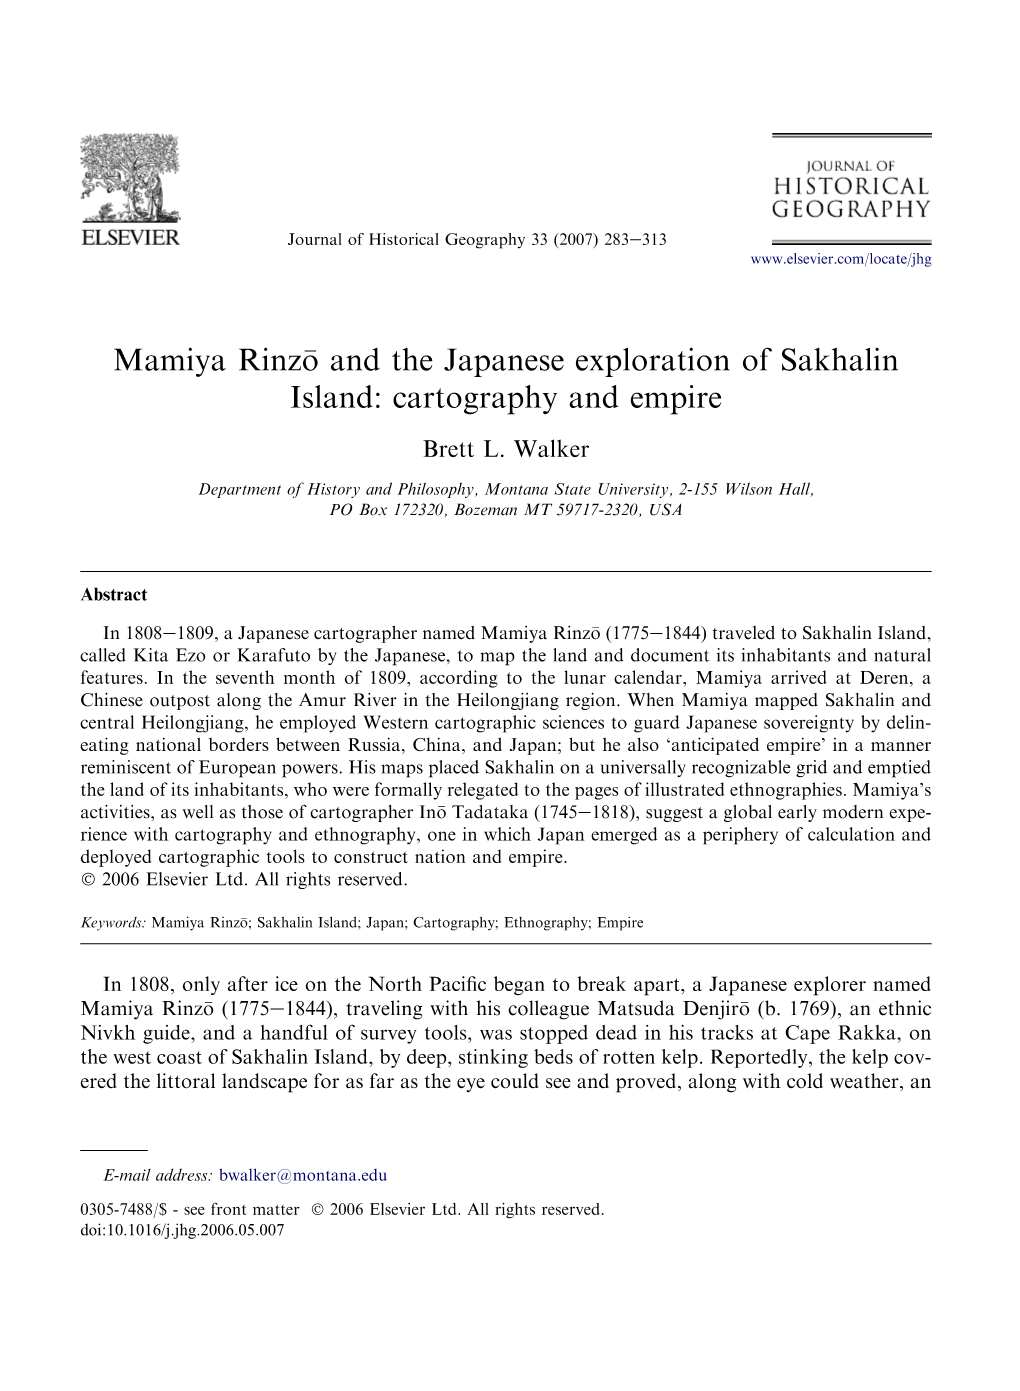 Mamiya Rinz¯O and the Japanese Exploration of Sakhalin Island